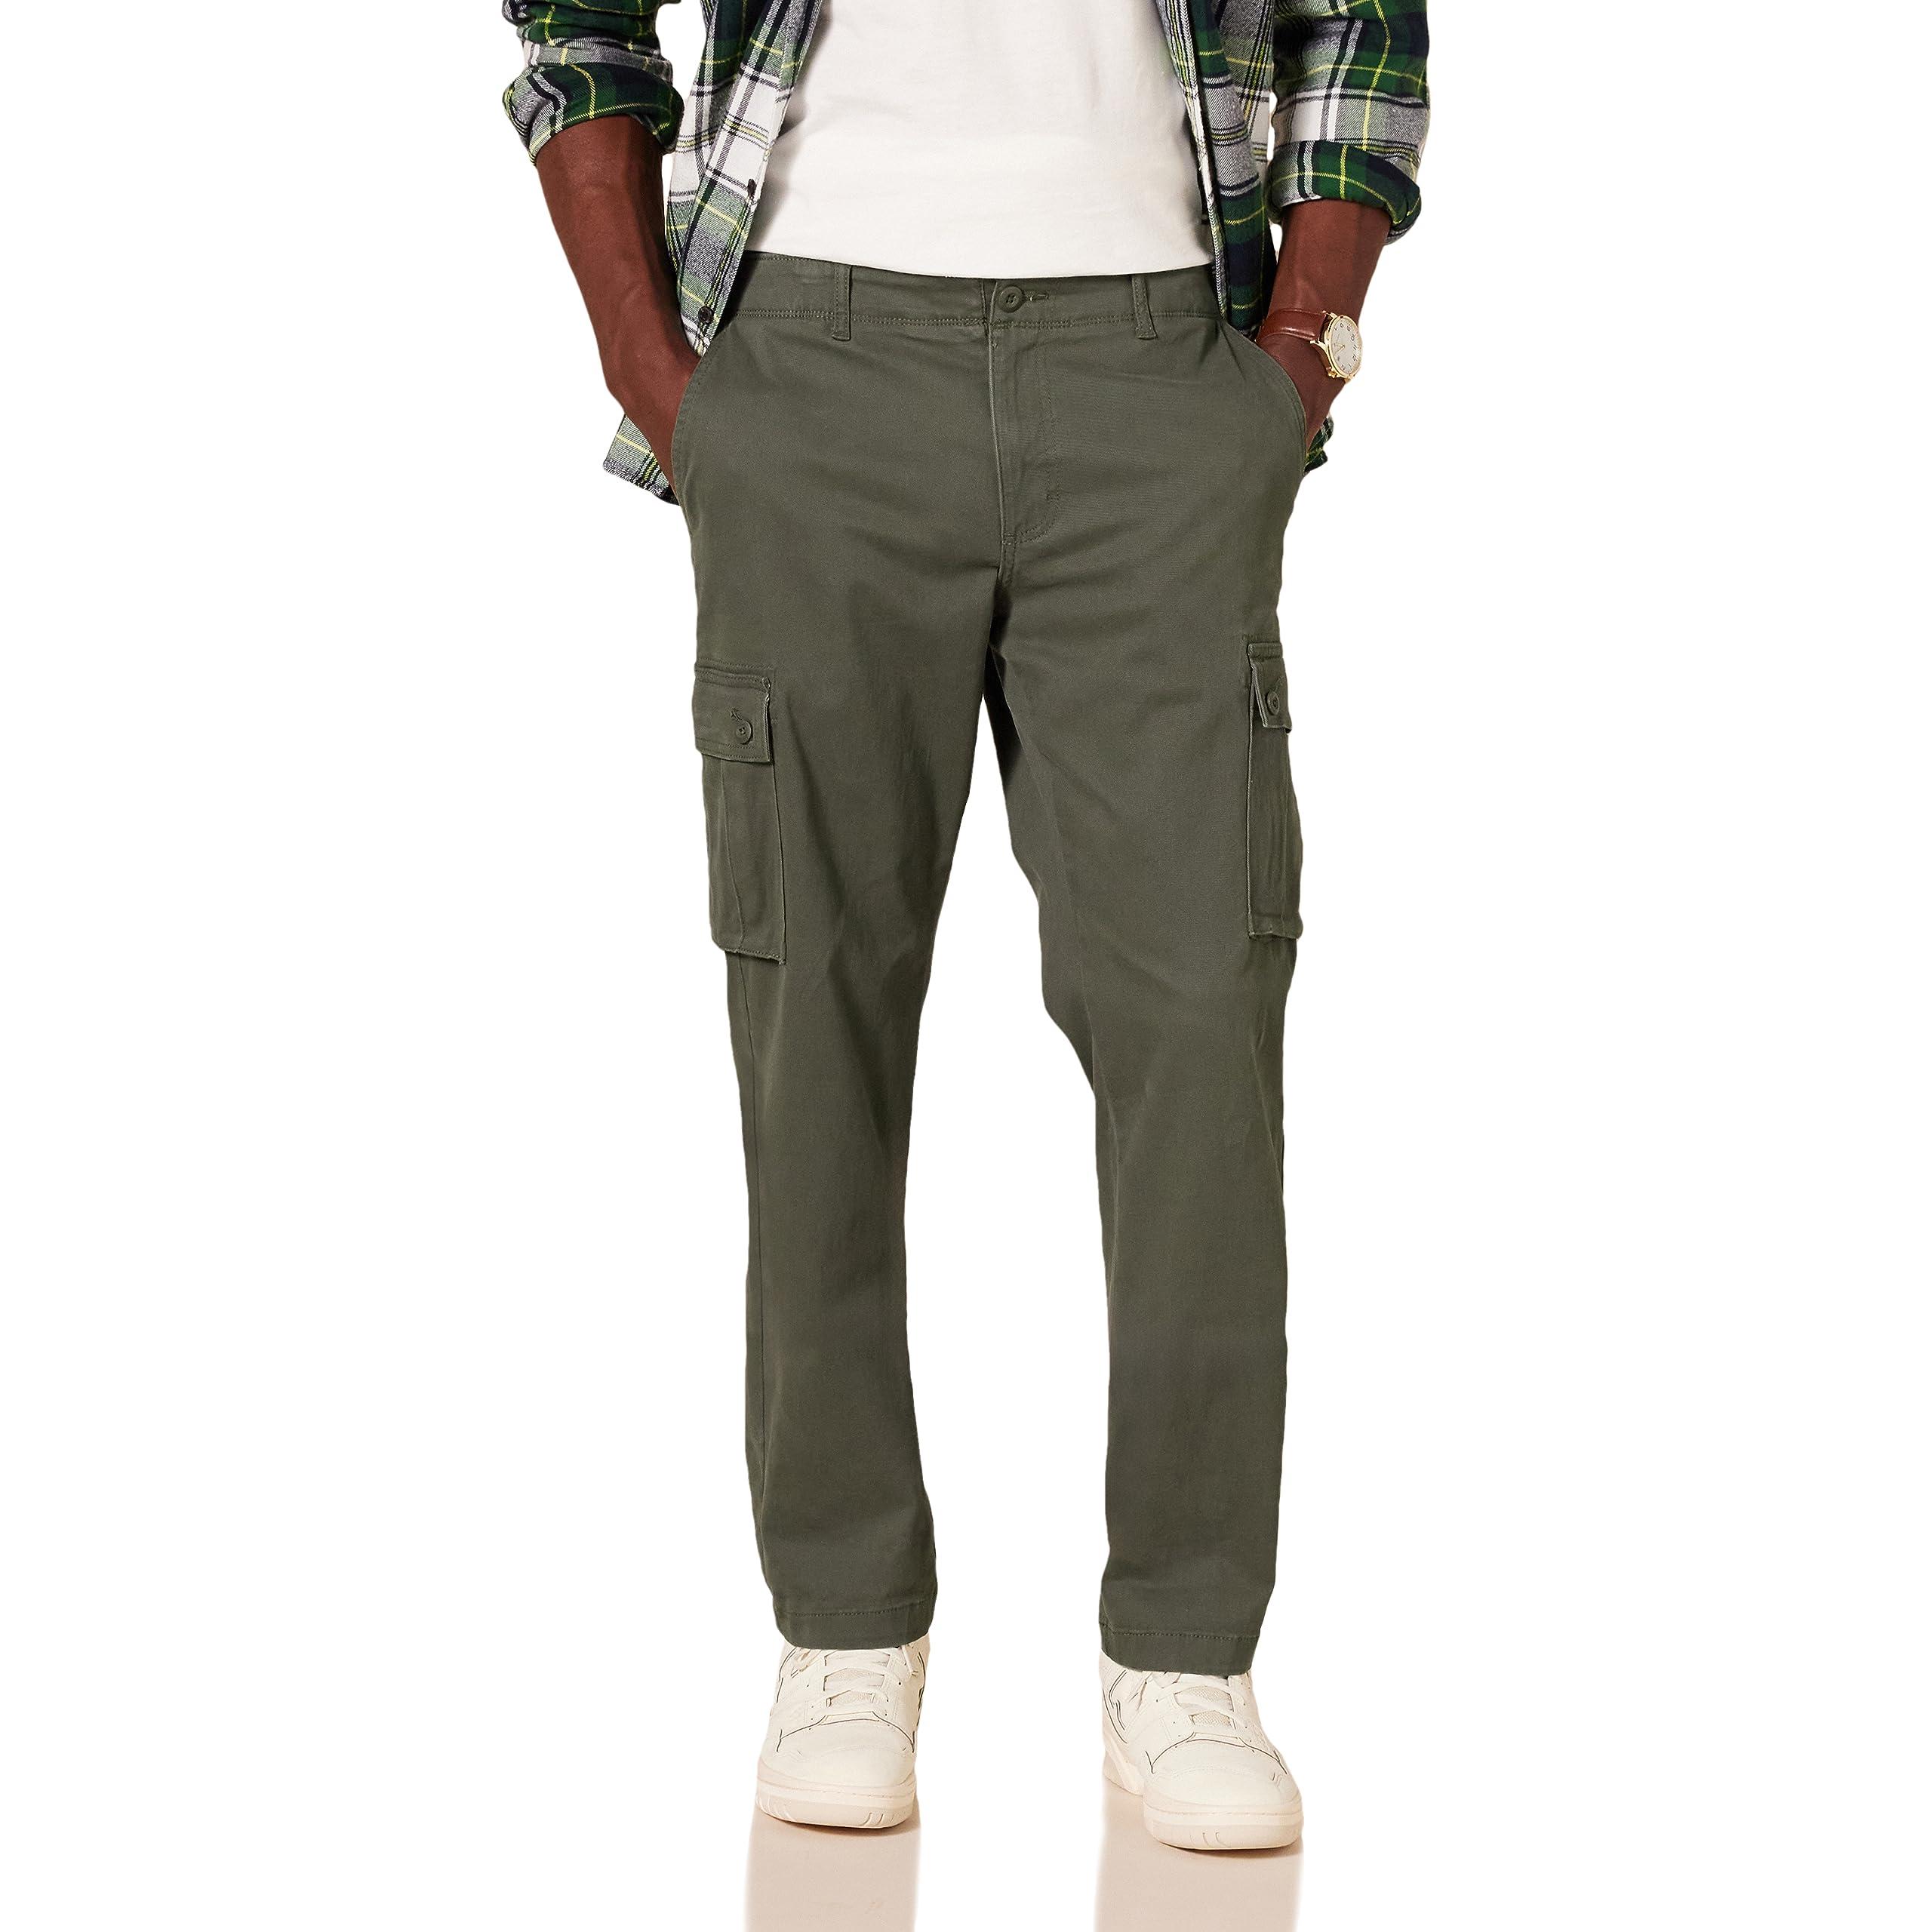 Buy Dealinkee Men's Waterproof Work Cargo Long Pants with Pockets (Green,  Large) at Amazon.in